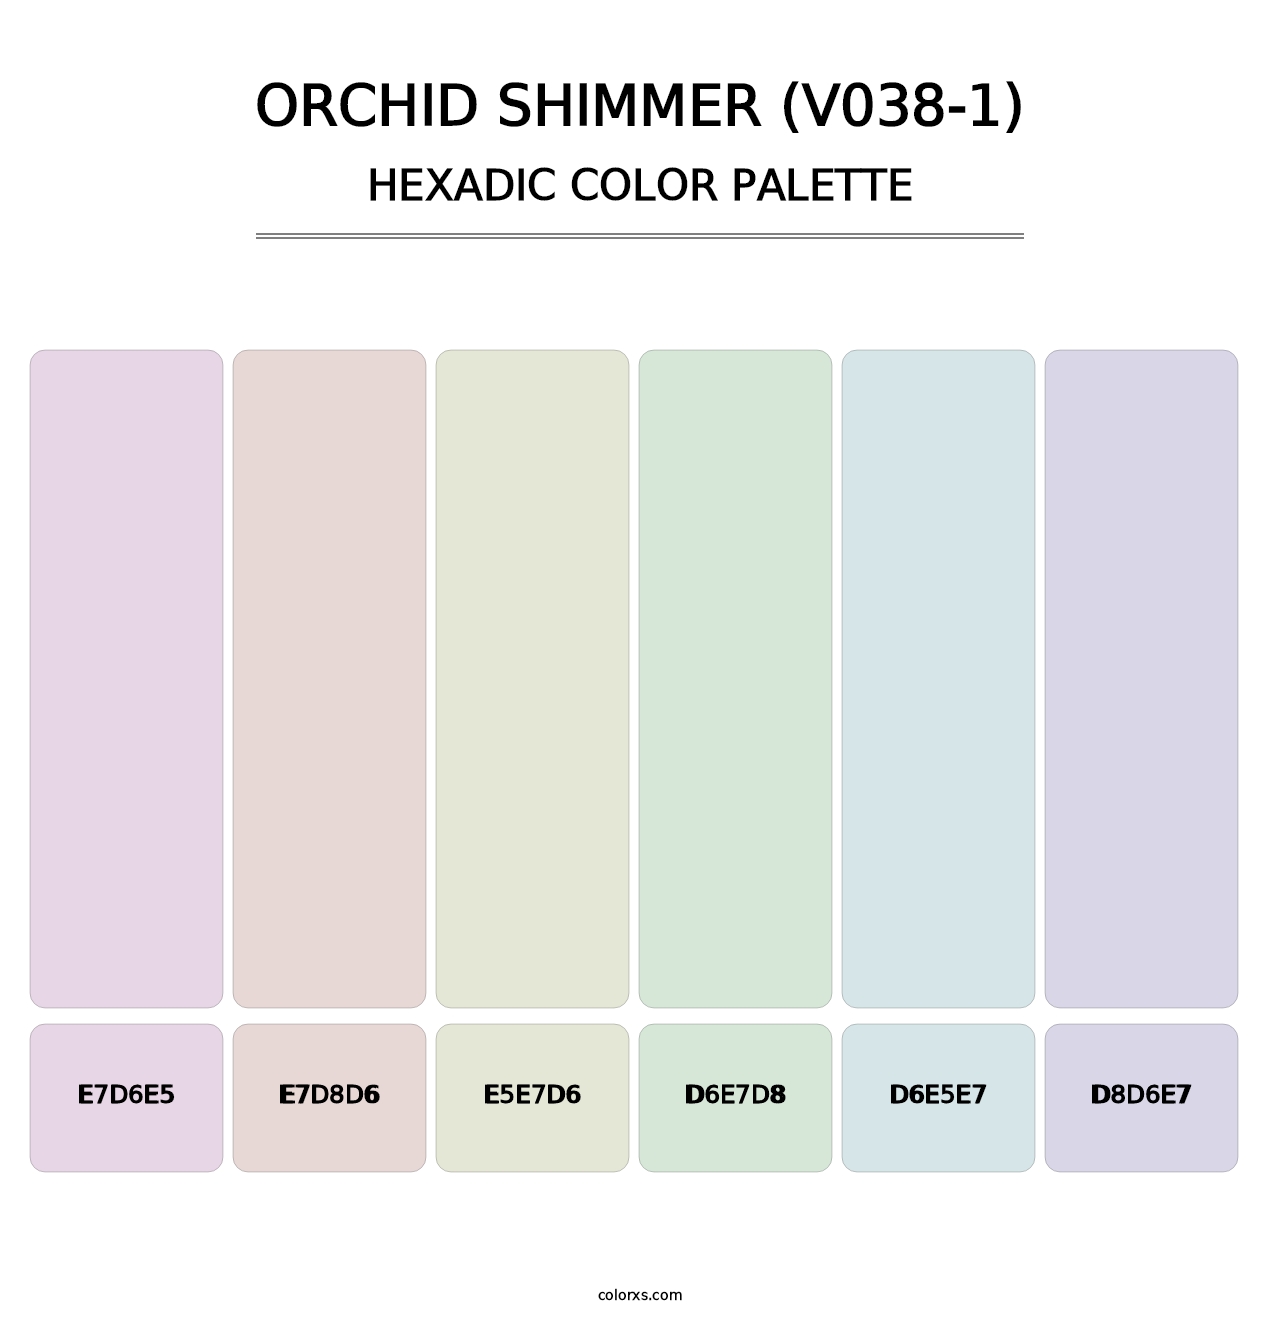 Orchid Shimmer (V038-1) - Hexadic Color Palette